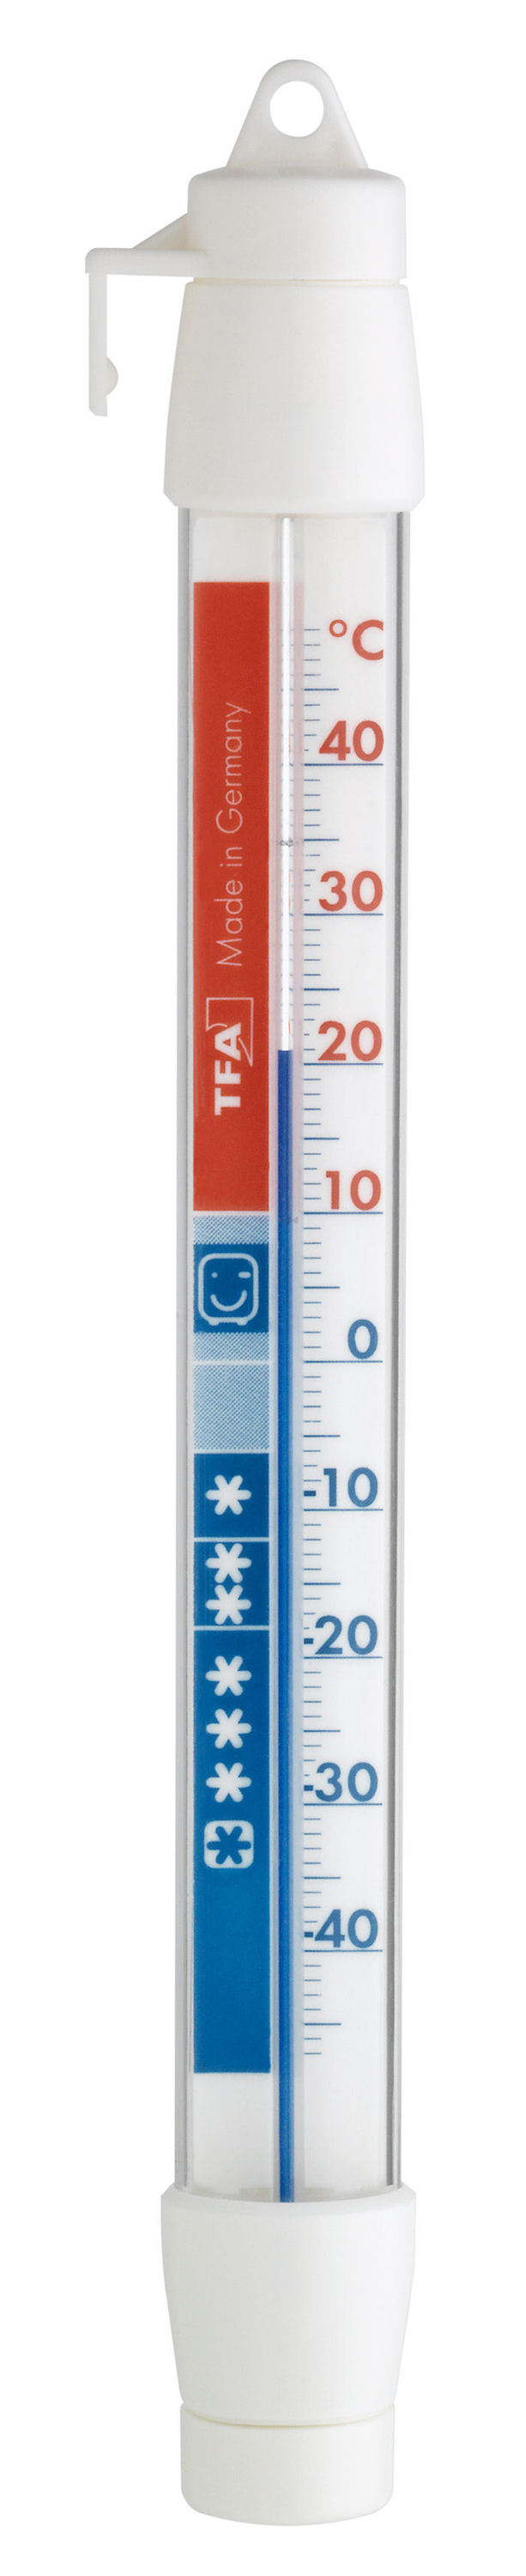 TFA 14.4003 Analoges Kühlthermometer